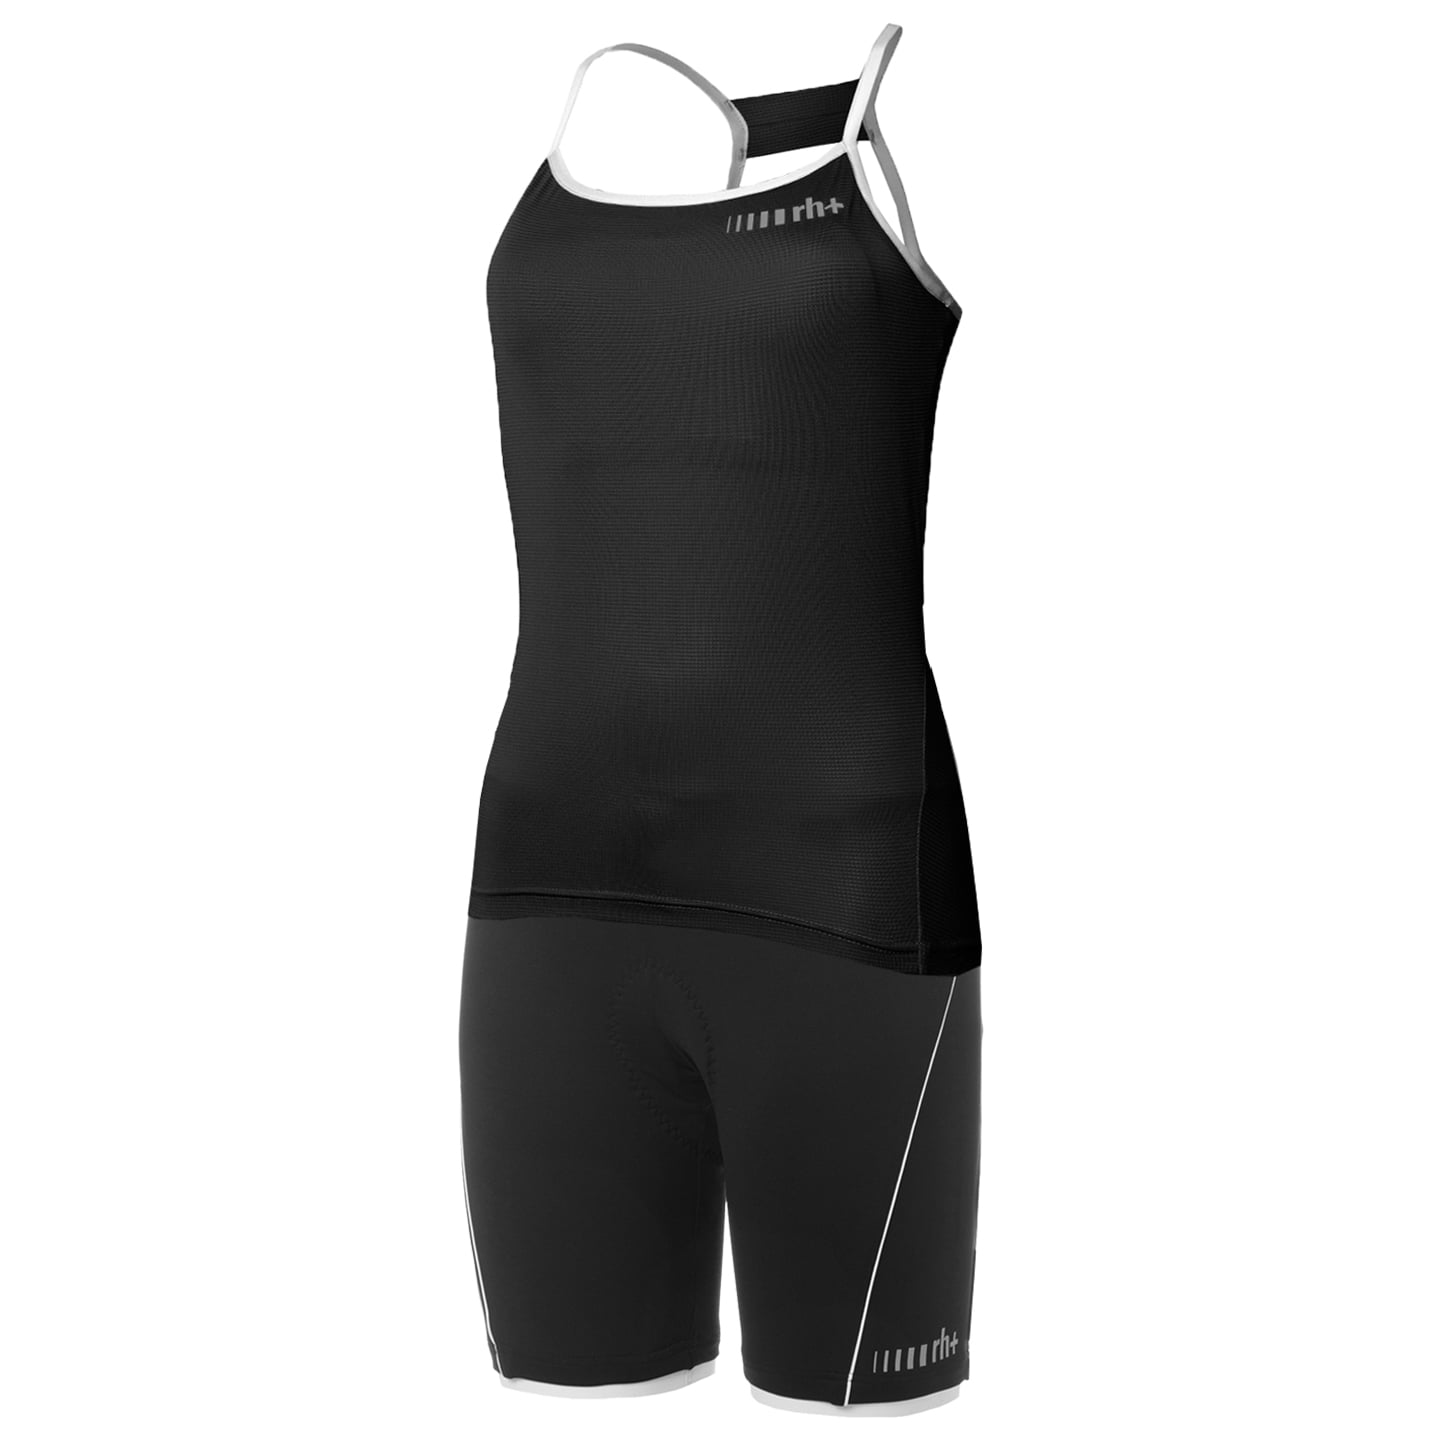 RH+ Prime Women’s Set (cycling jersey + cycling shorts) Women’s Set (2 pieces), Cycling clothing